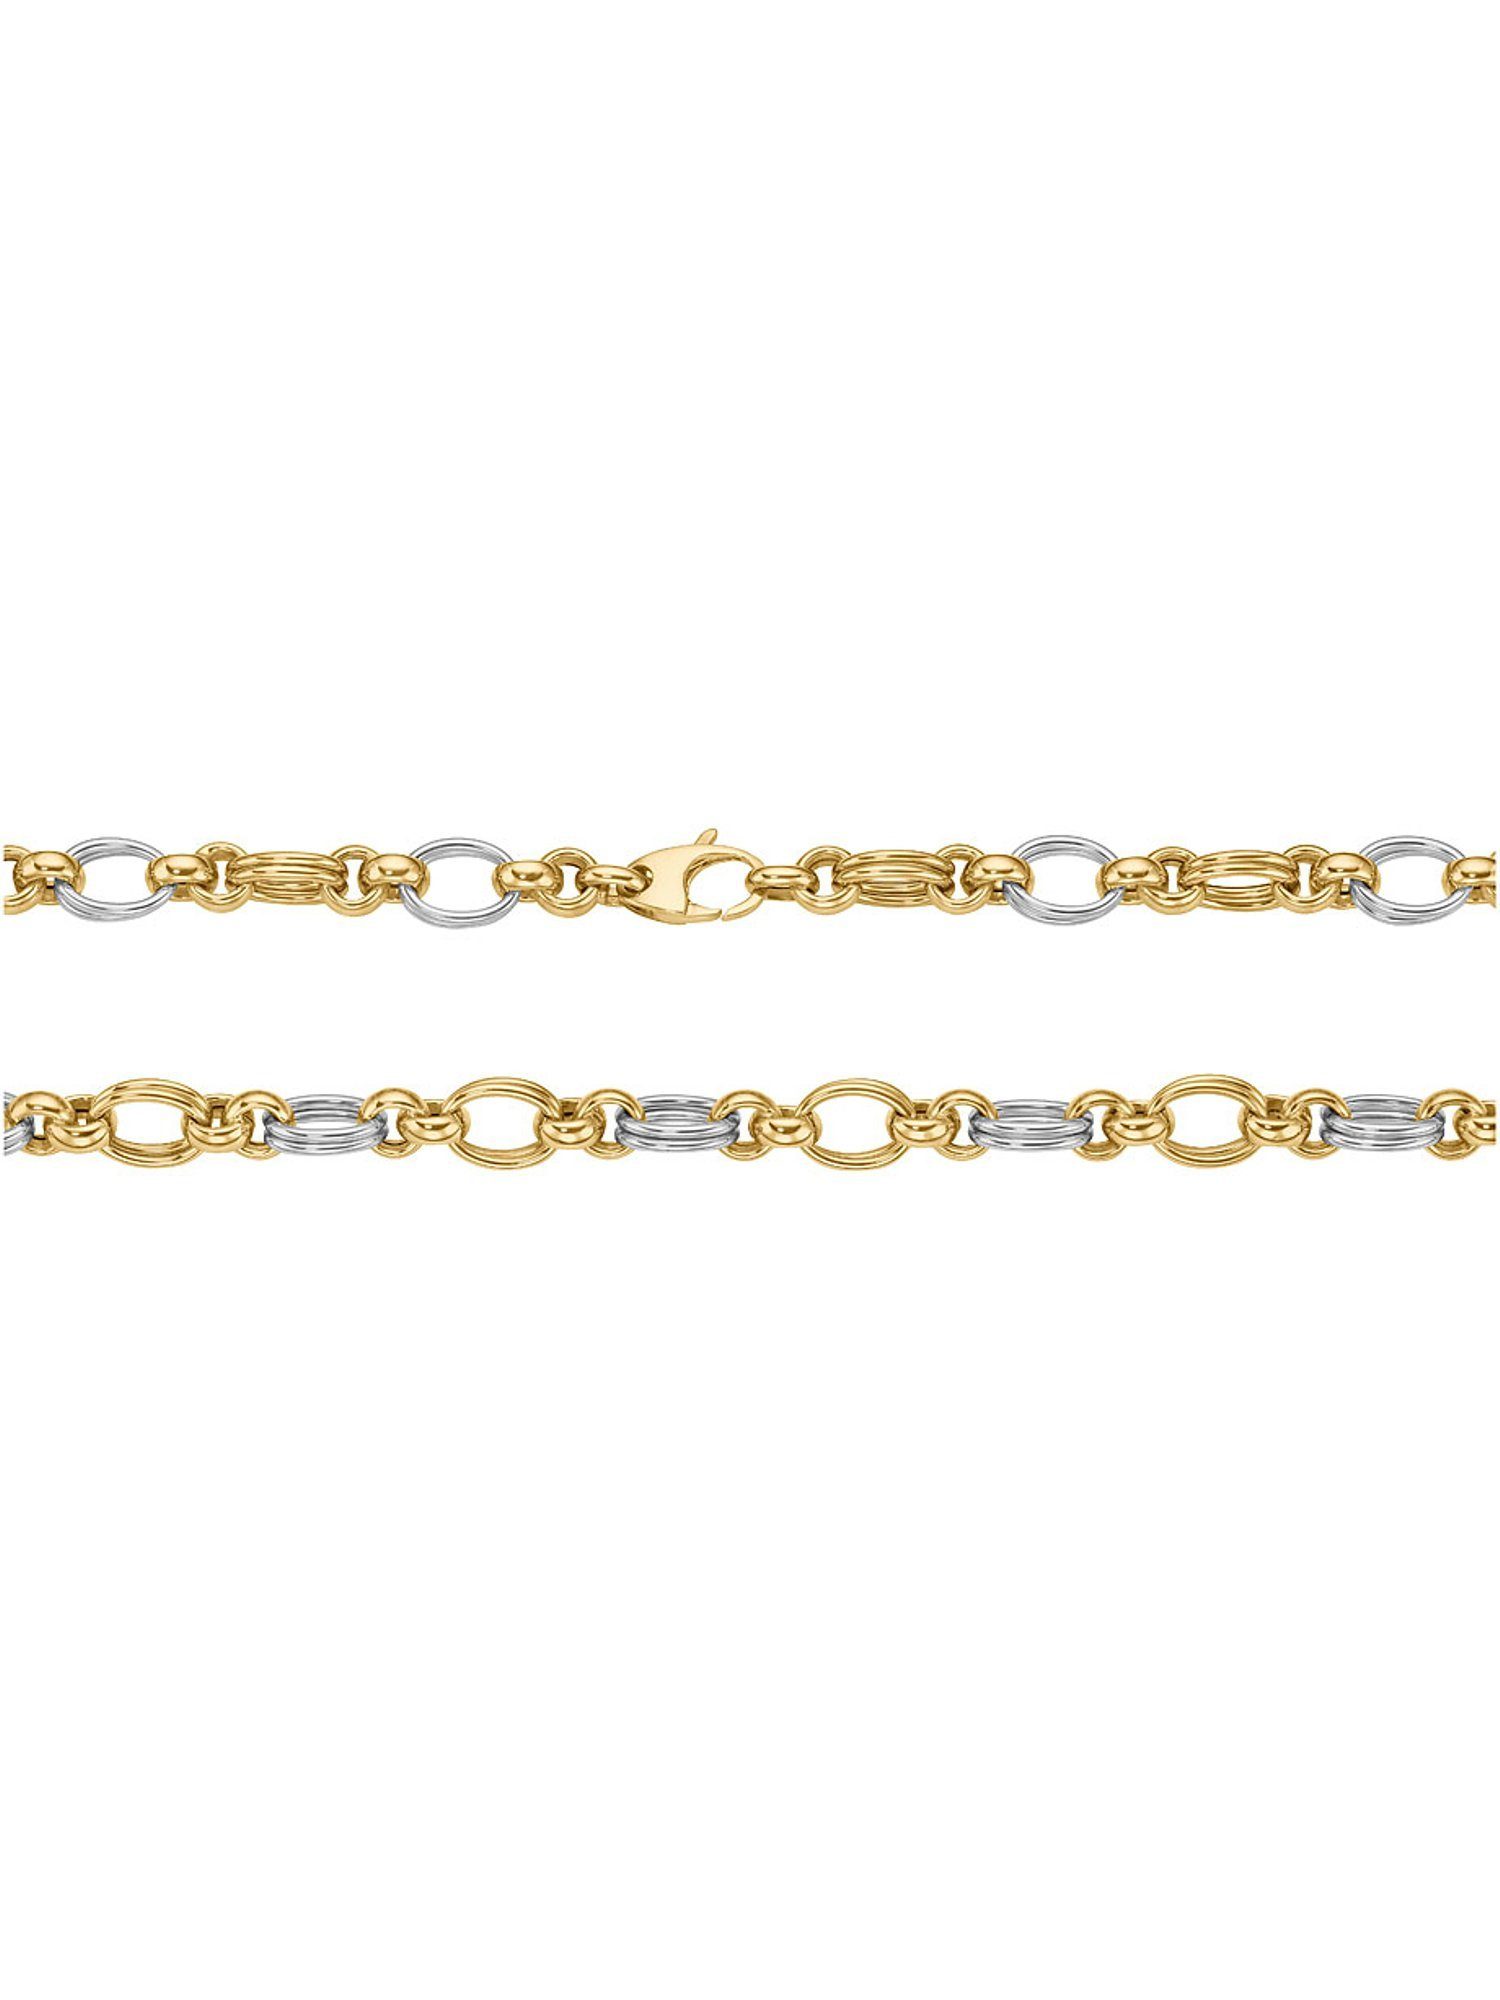 CHRIST Damen-Kette Goldkette Gelbgold, CHRIST Weißgold 375er 375er